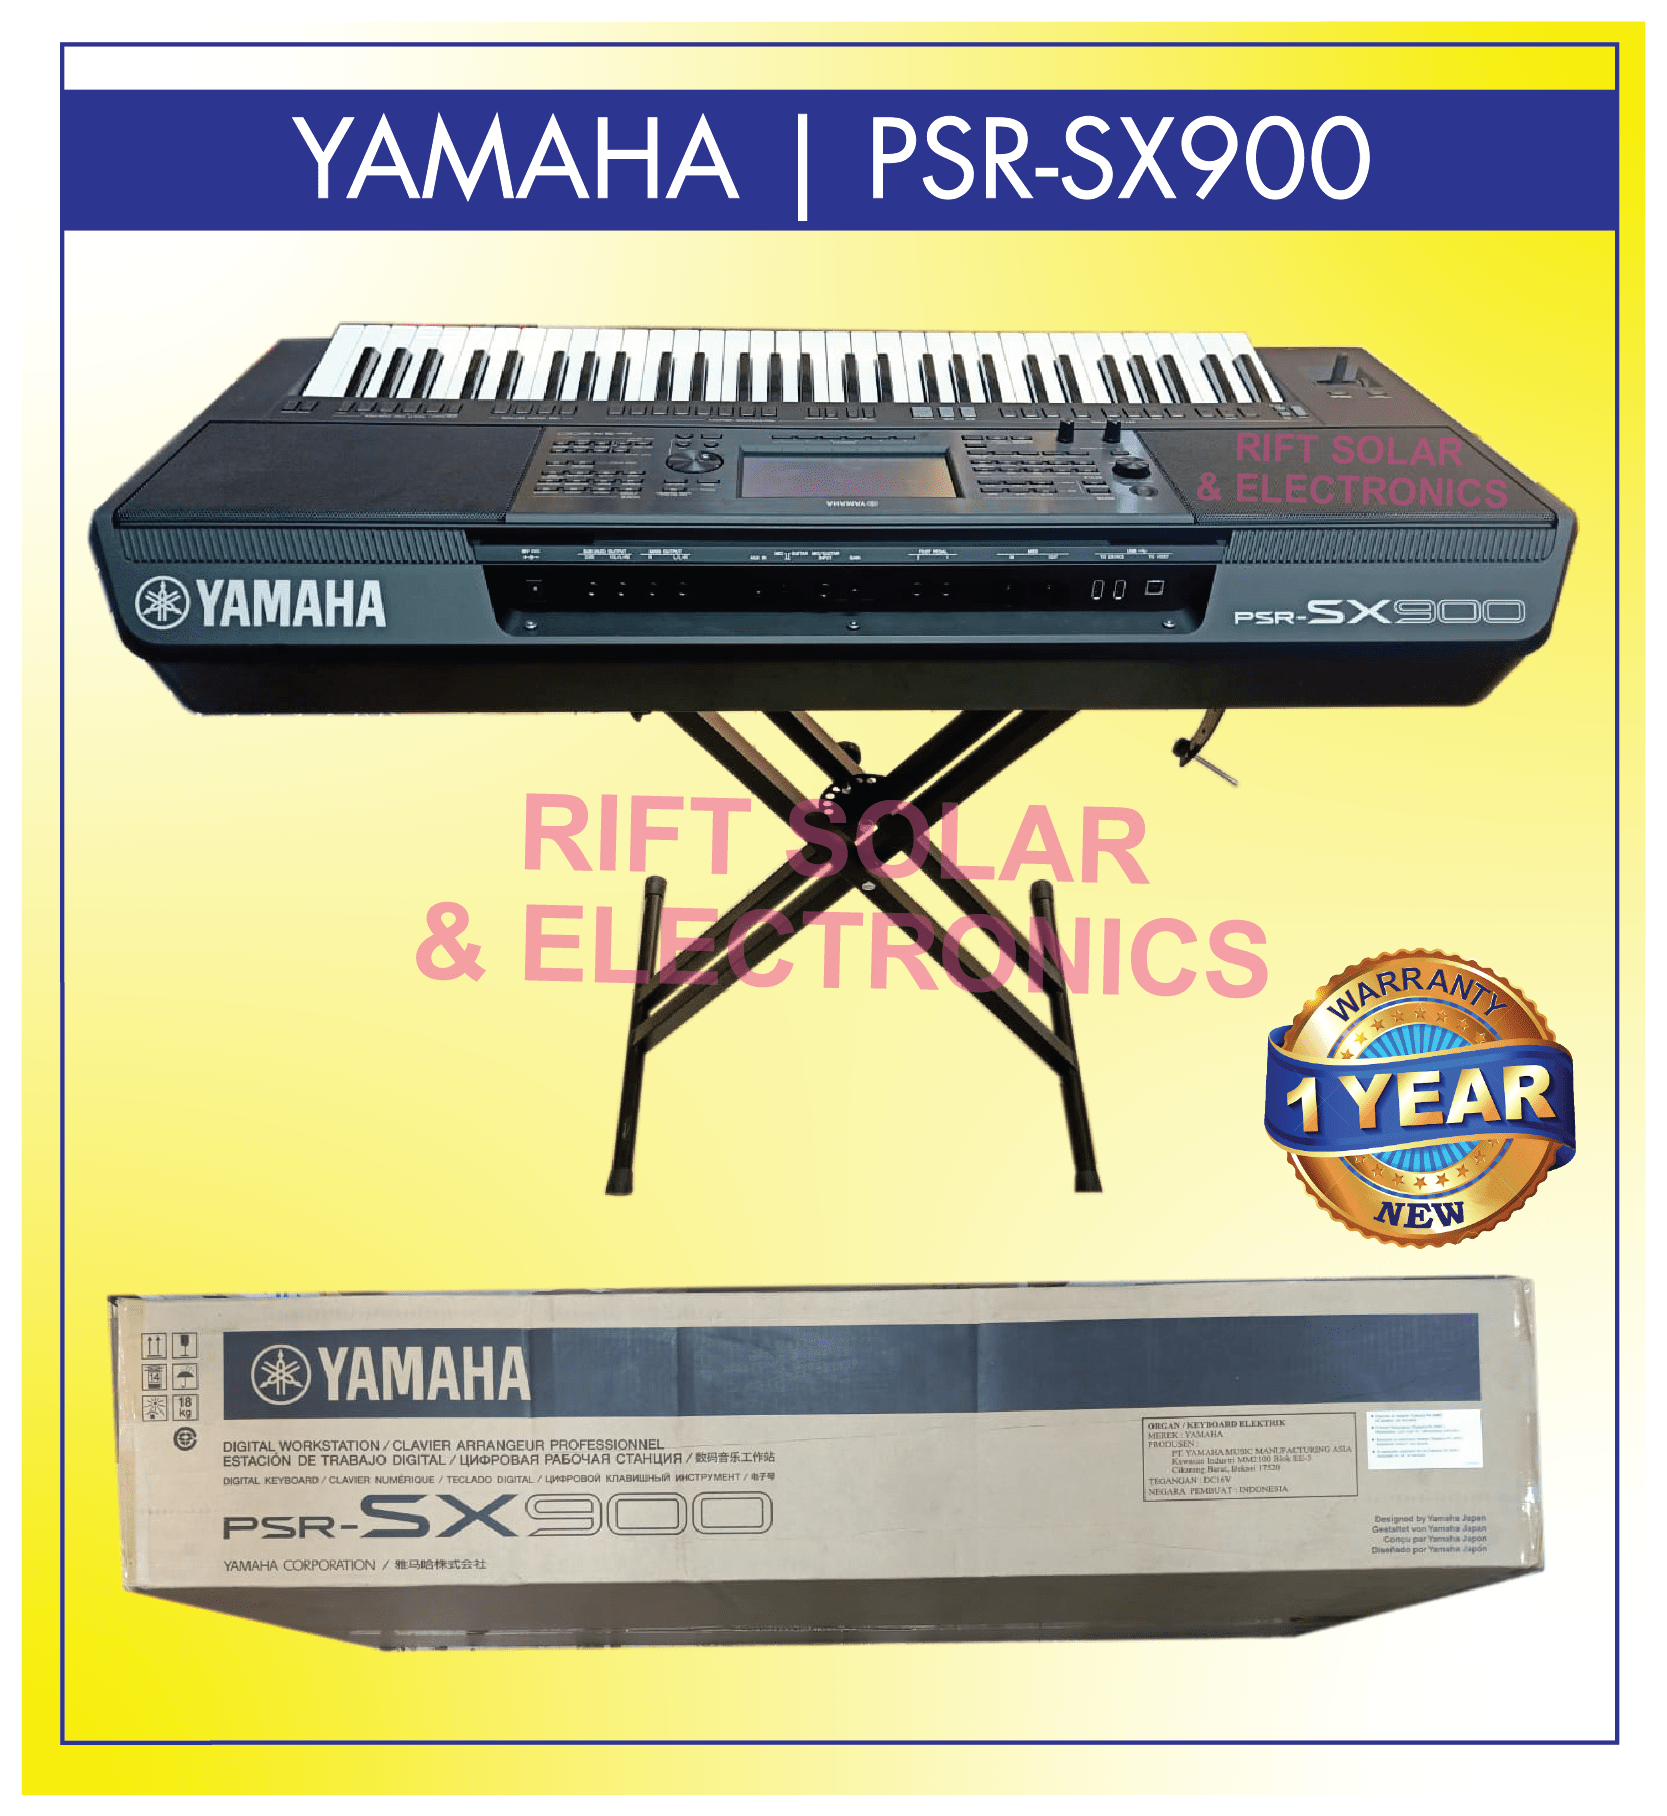 Width x height x depth (without music rest). Yamaha Psr Sx900 Rift Solar And Electronics